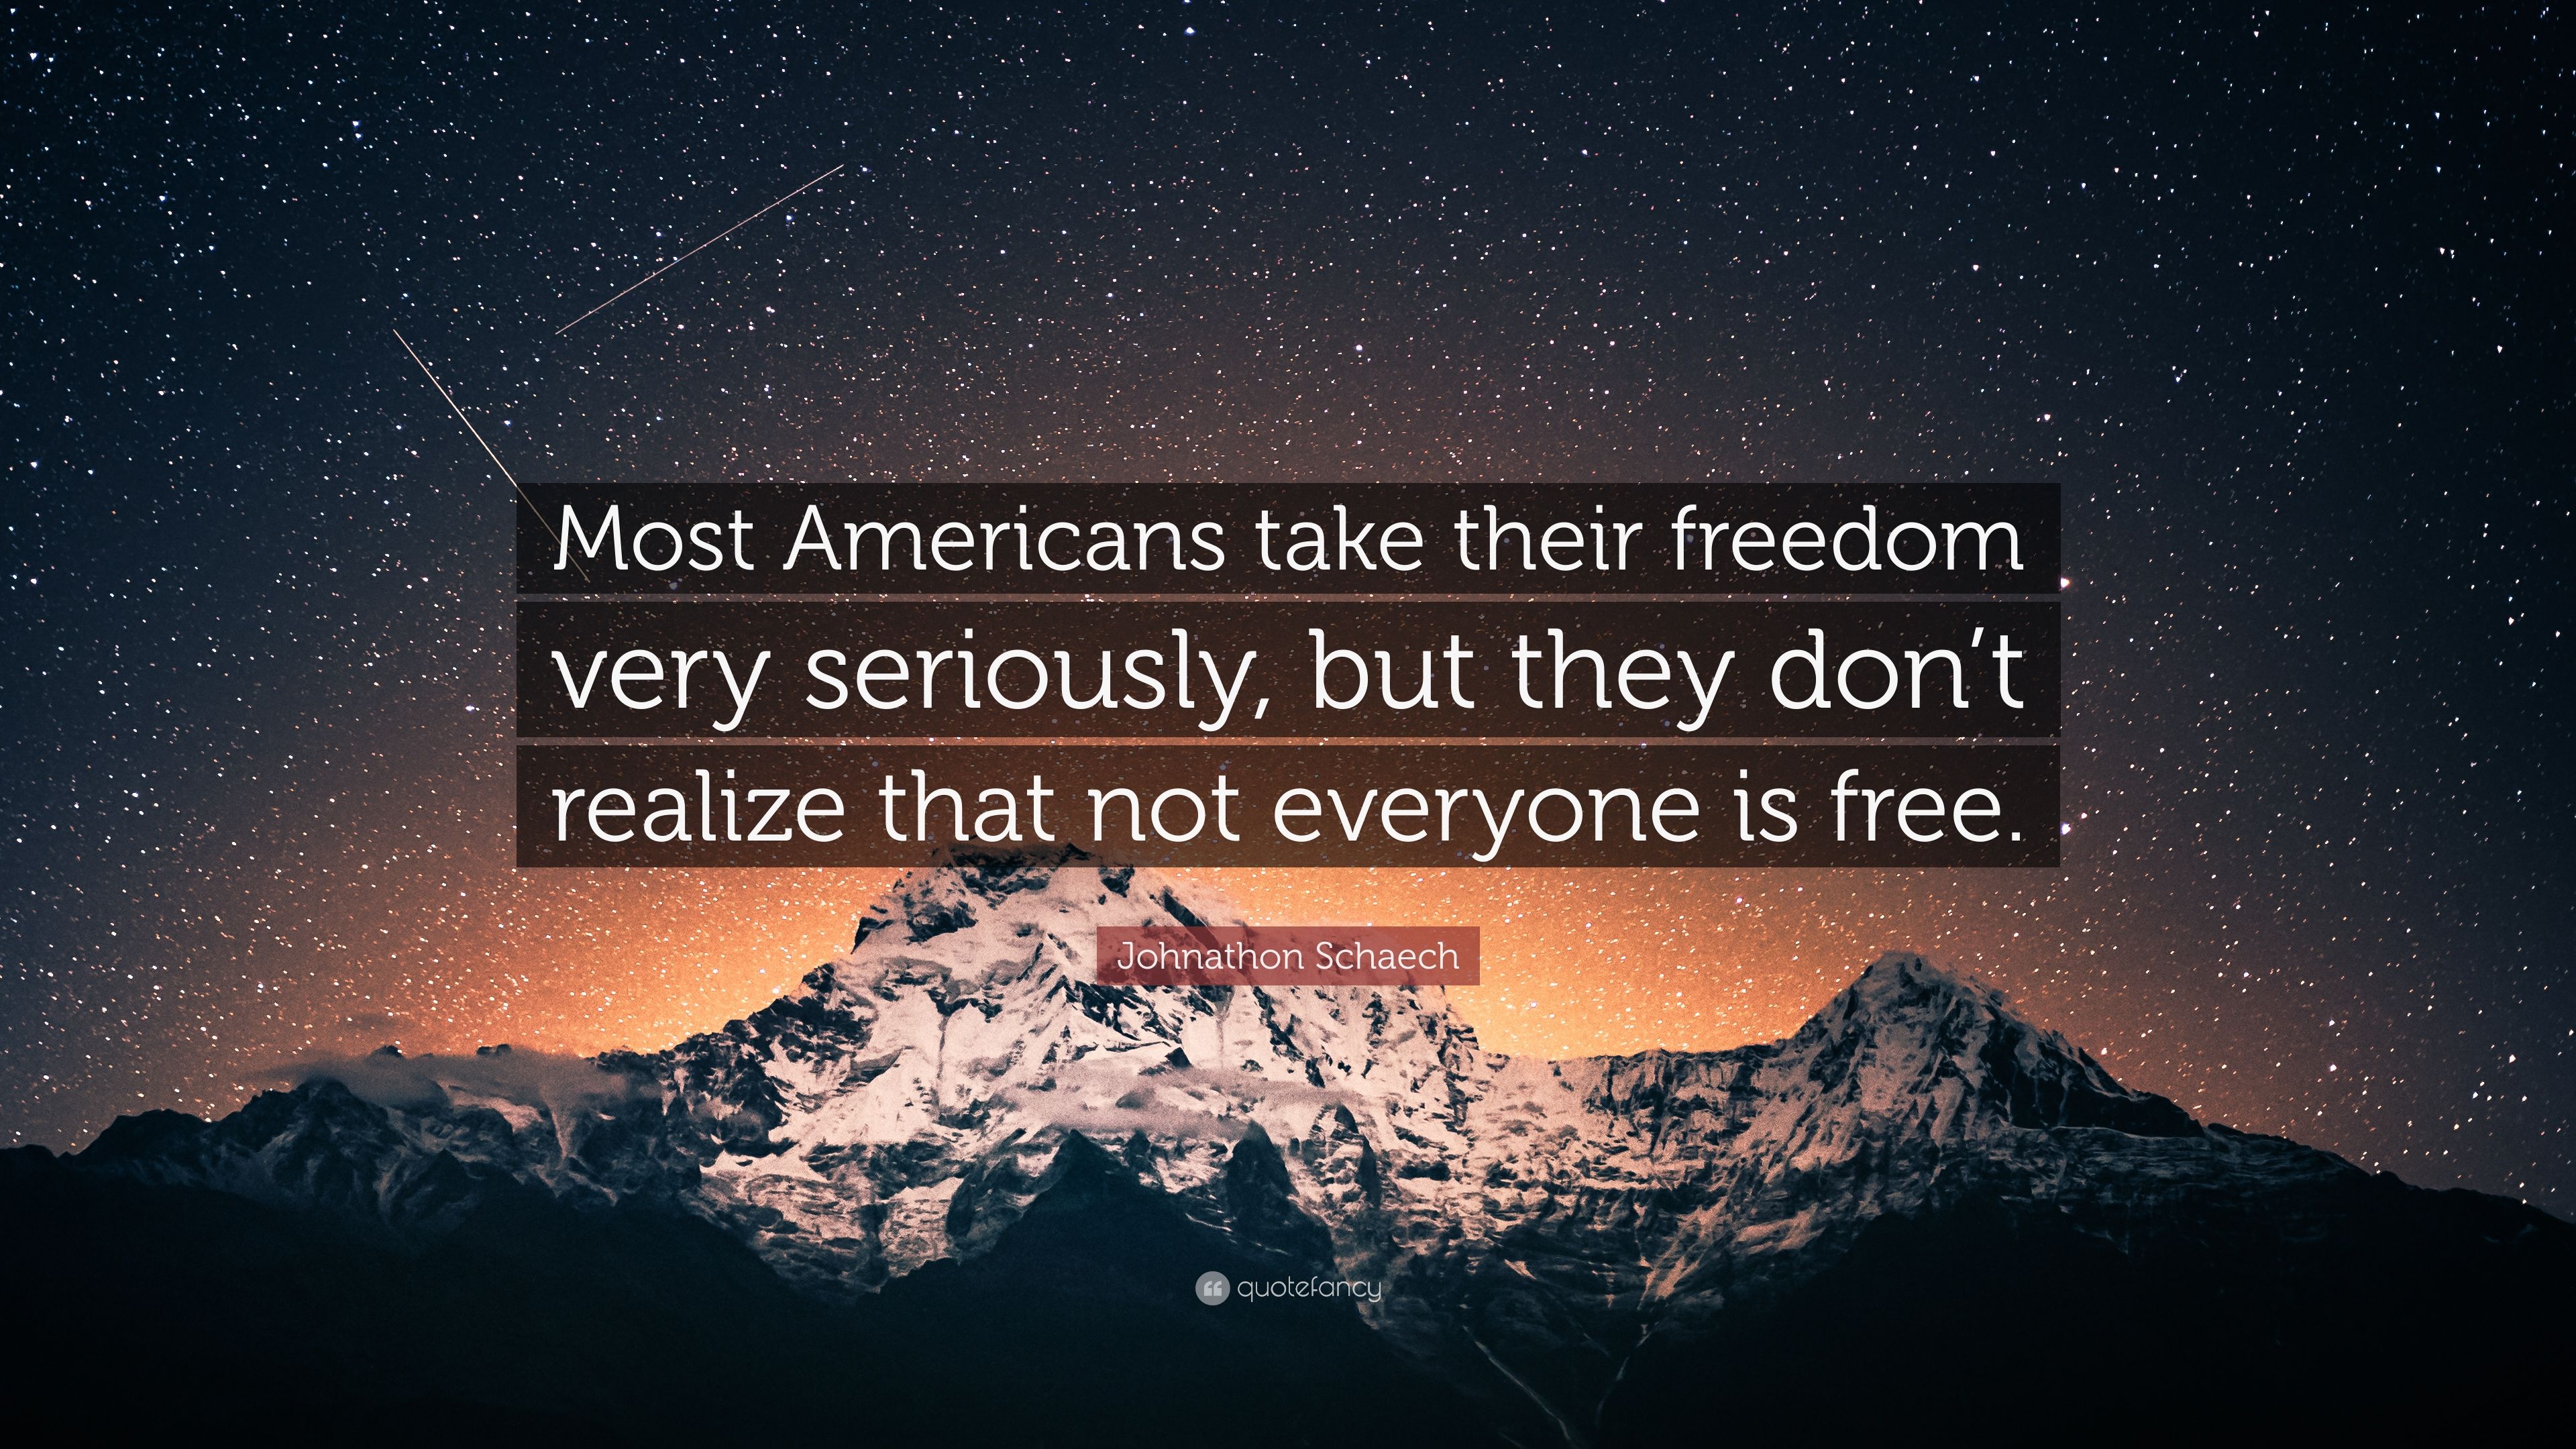 Johnathon Schaech Quote: “Most Americans take their freedom